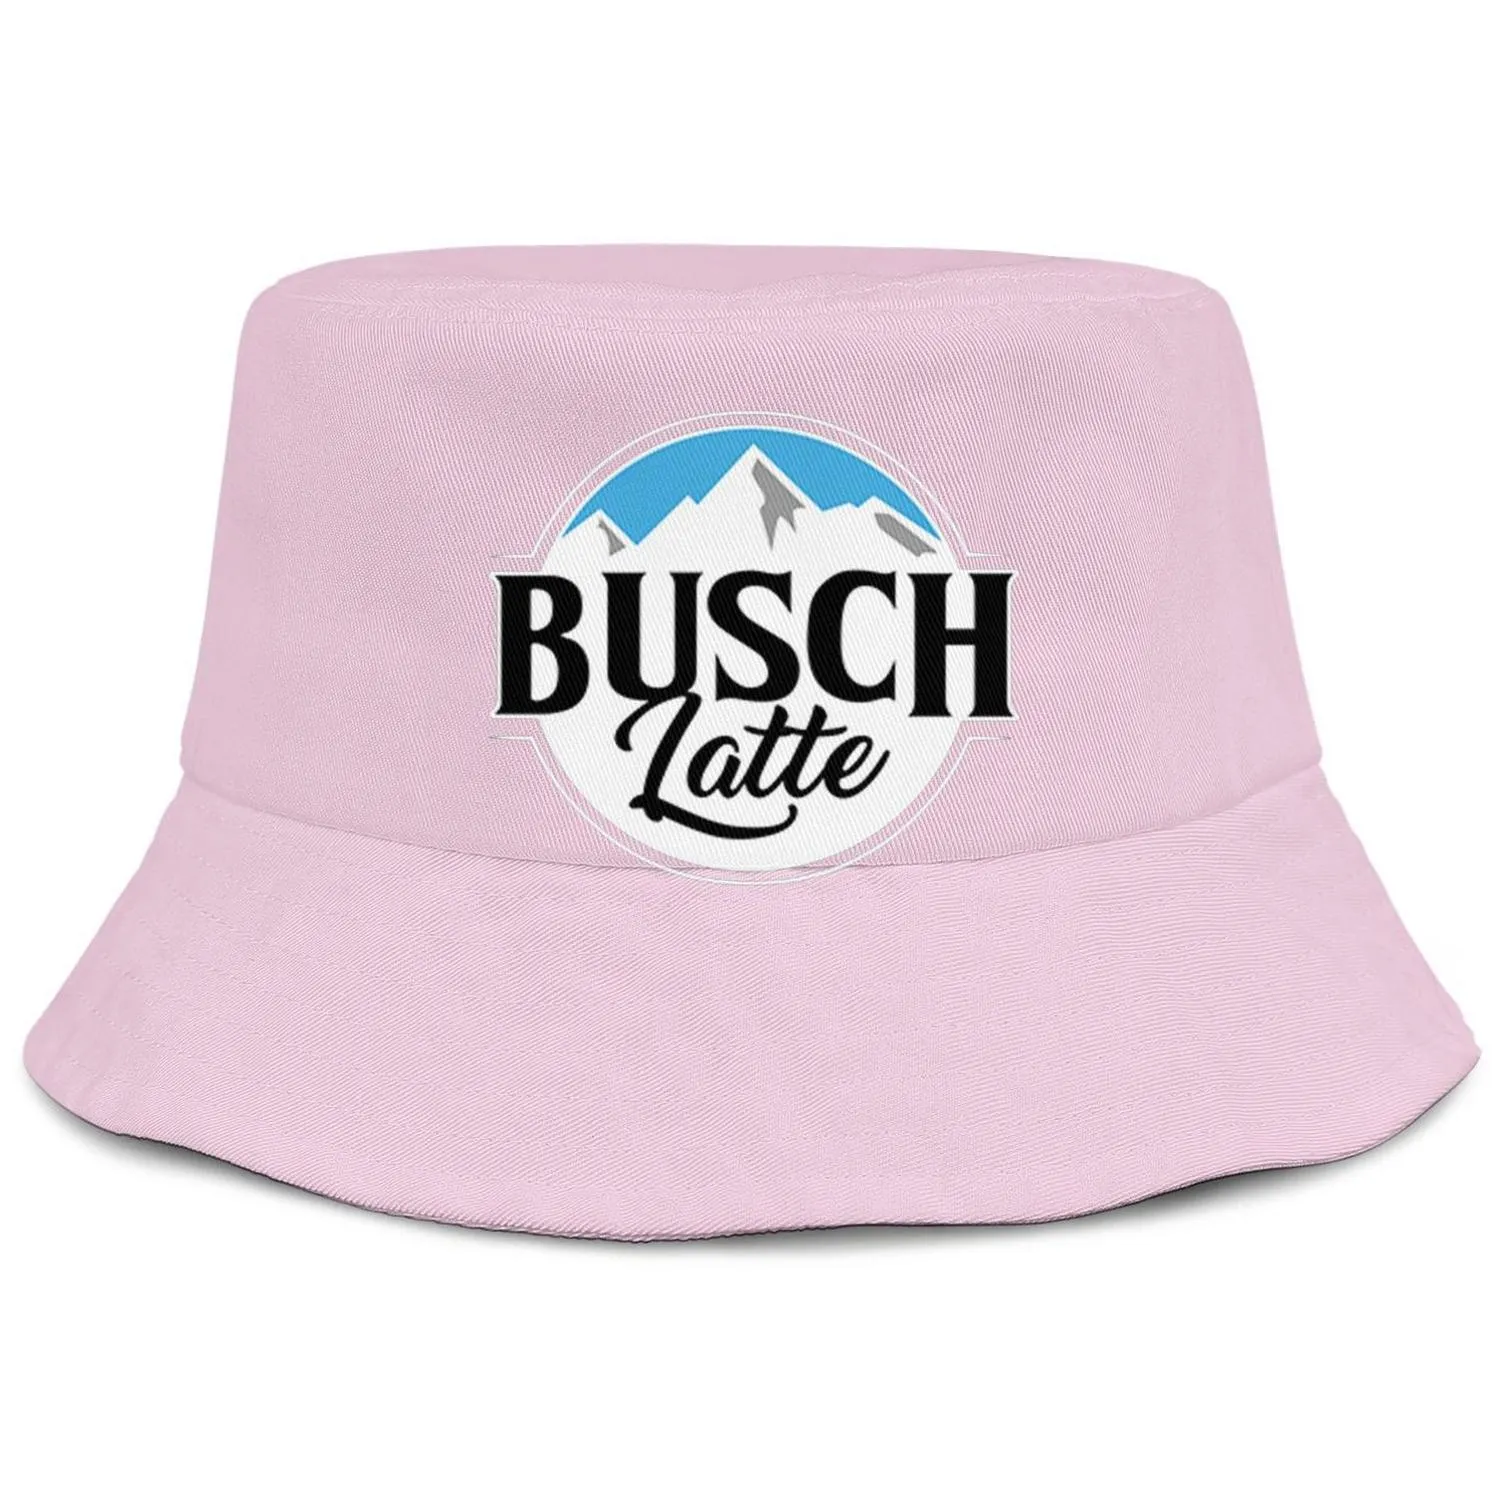 Busch Light Beer Logo Mens and Womens Buckethat Cool Youth Hink Baseballcap Light Blue Adge White Latte Så mycket4707196